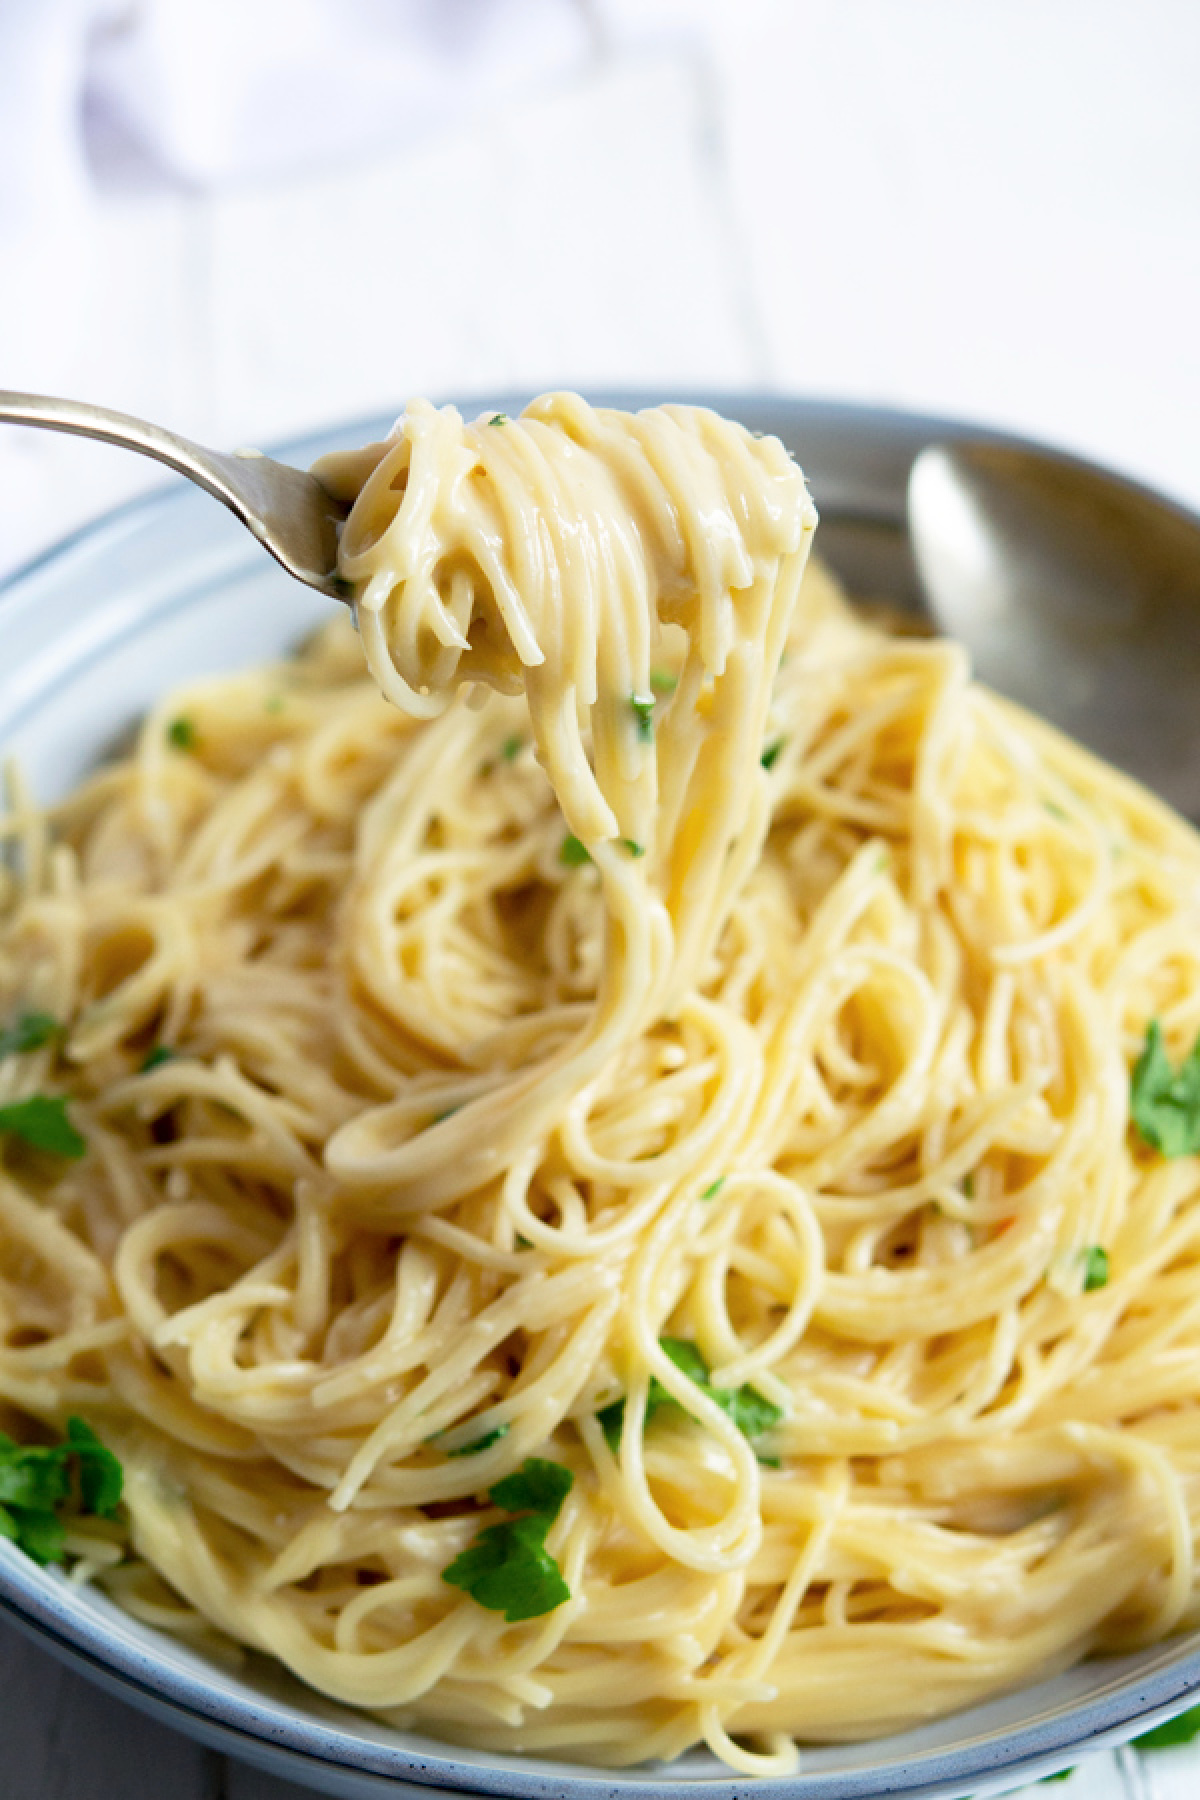 A big bowl of homemade Garlic Parmesan noodles